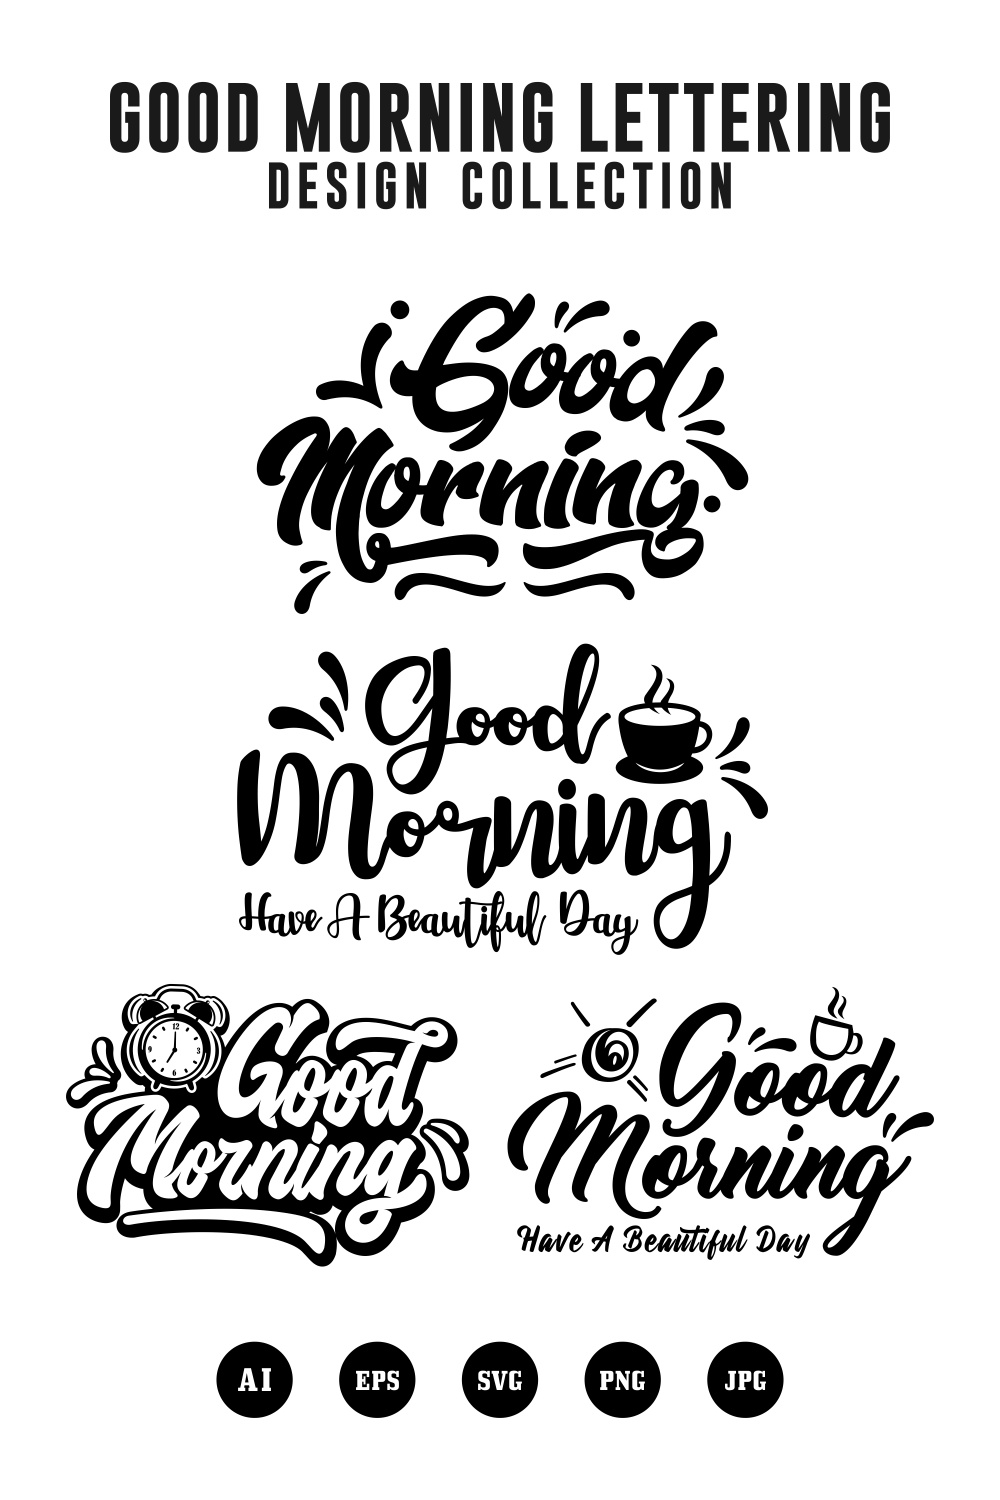 Set Good morning lettering design collection - $6 pinterest preview image.